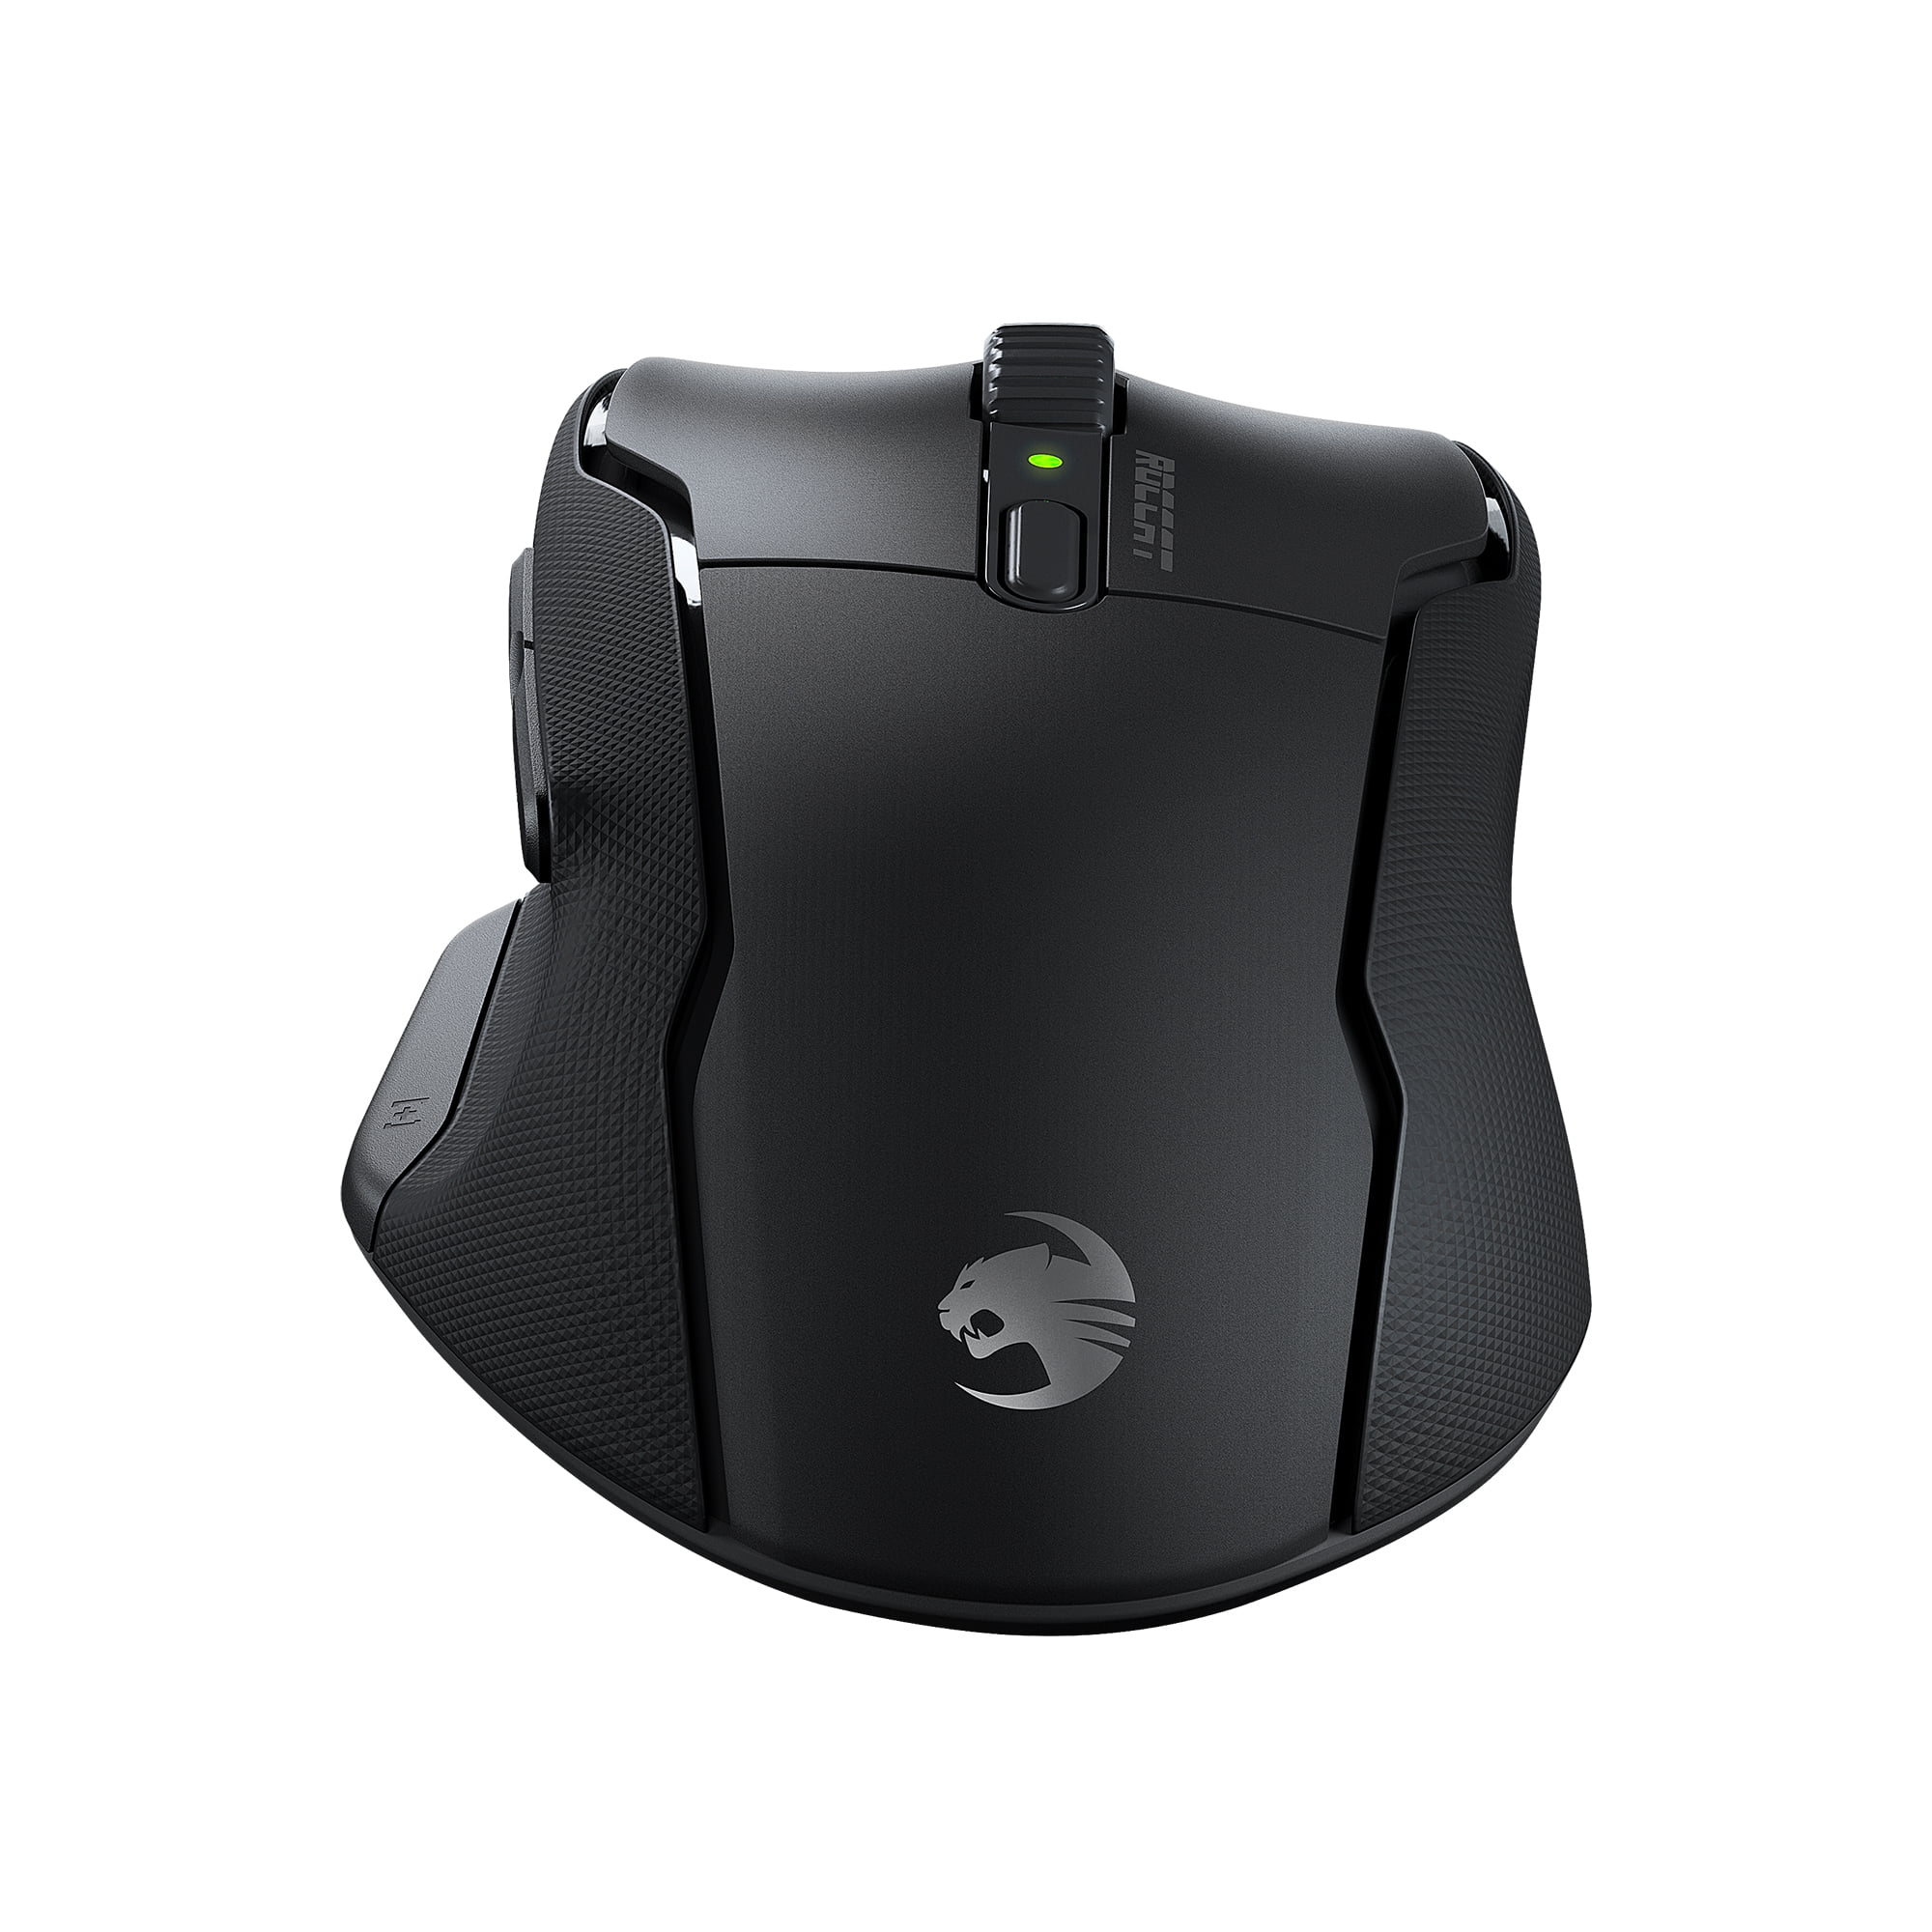 ROCCAT Kone XP Air – Wireless Customizable Ergonomic RGB Gaming Mouse, 19K  DPI Optical Sensor, 100-hour Battery & Charging Dock, 29 Programmable  Inputs & AIMO R…